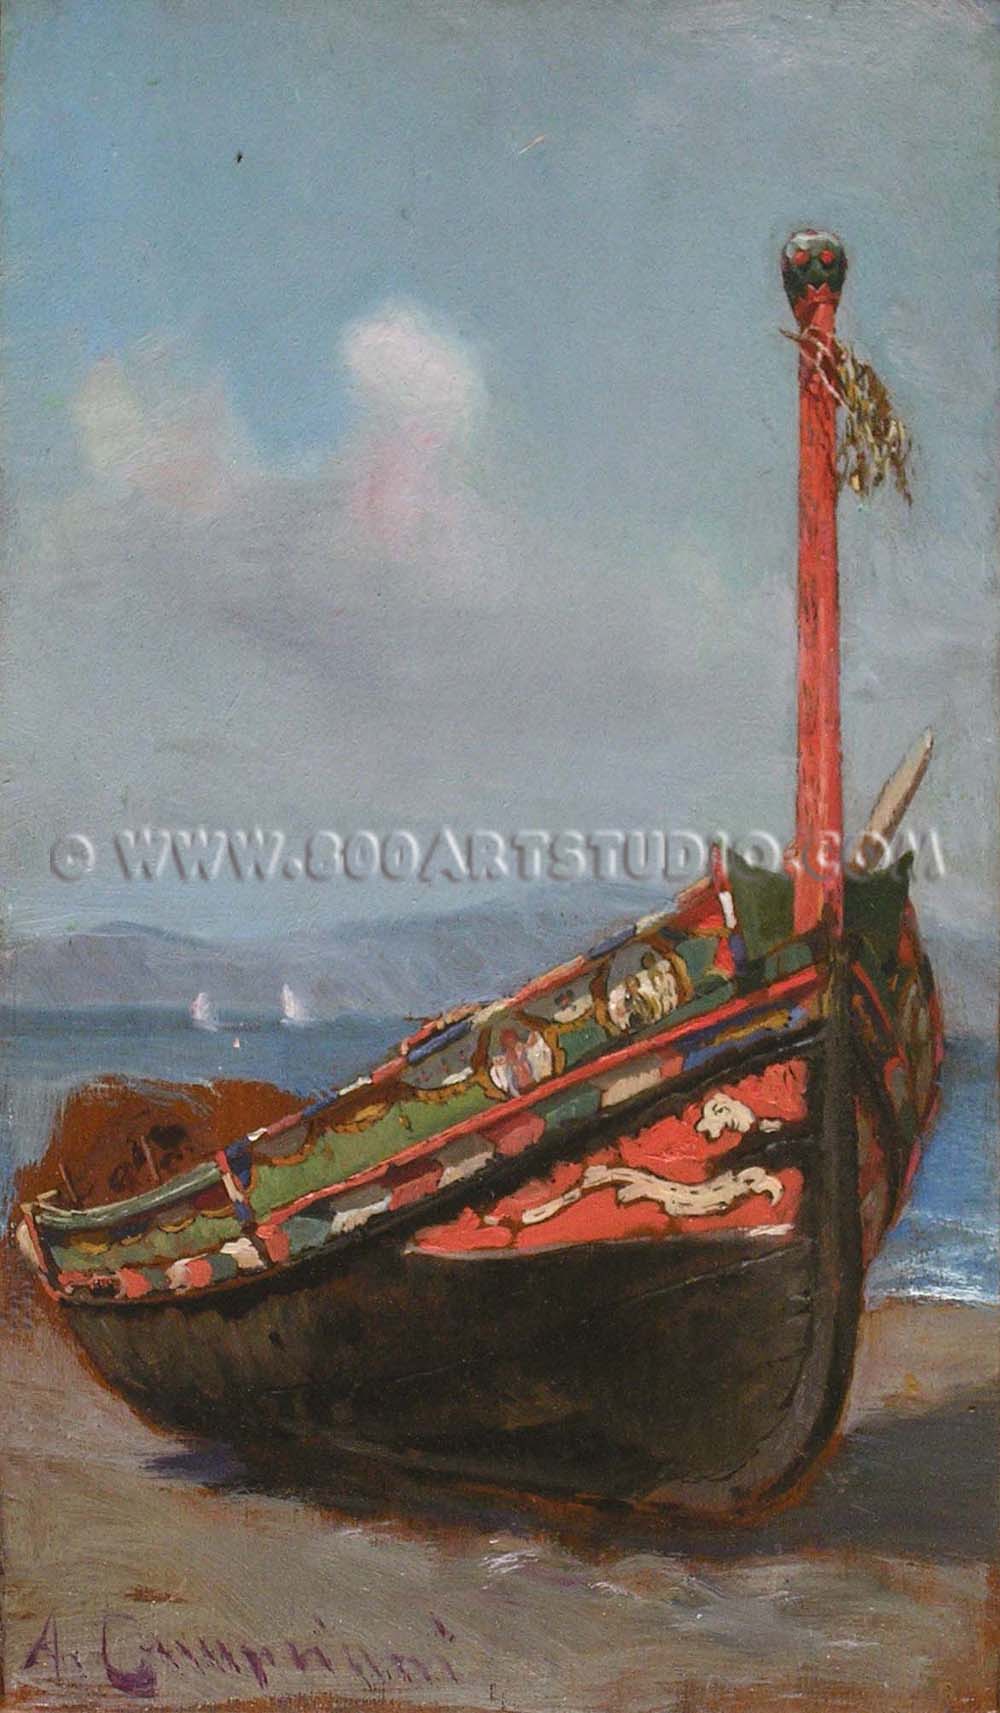 Alceste Campriani - Boat on the beach